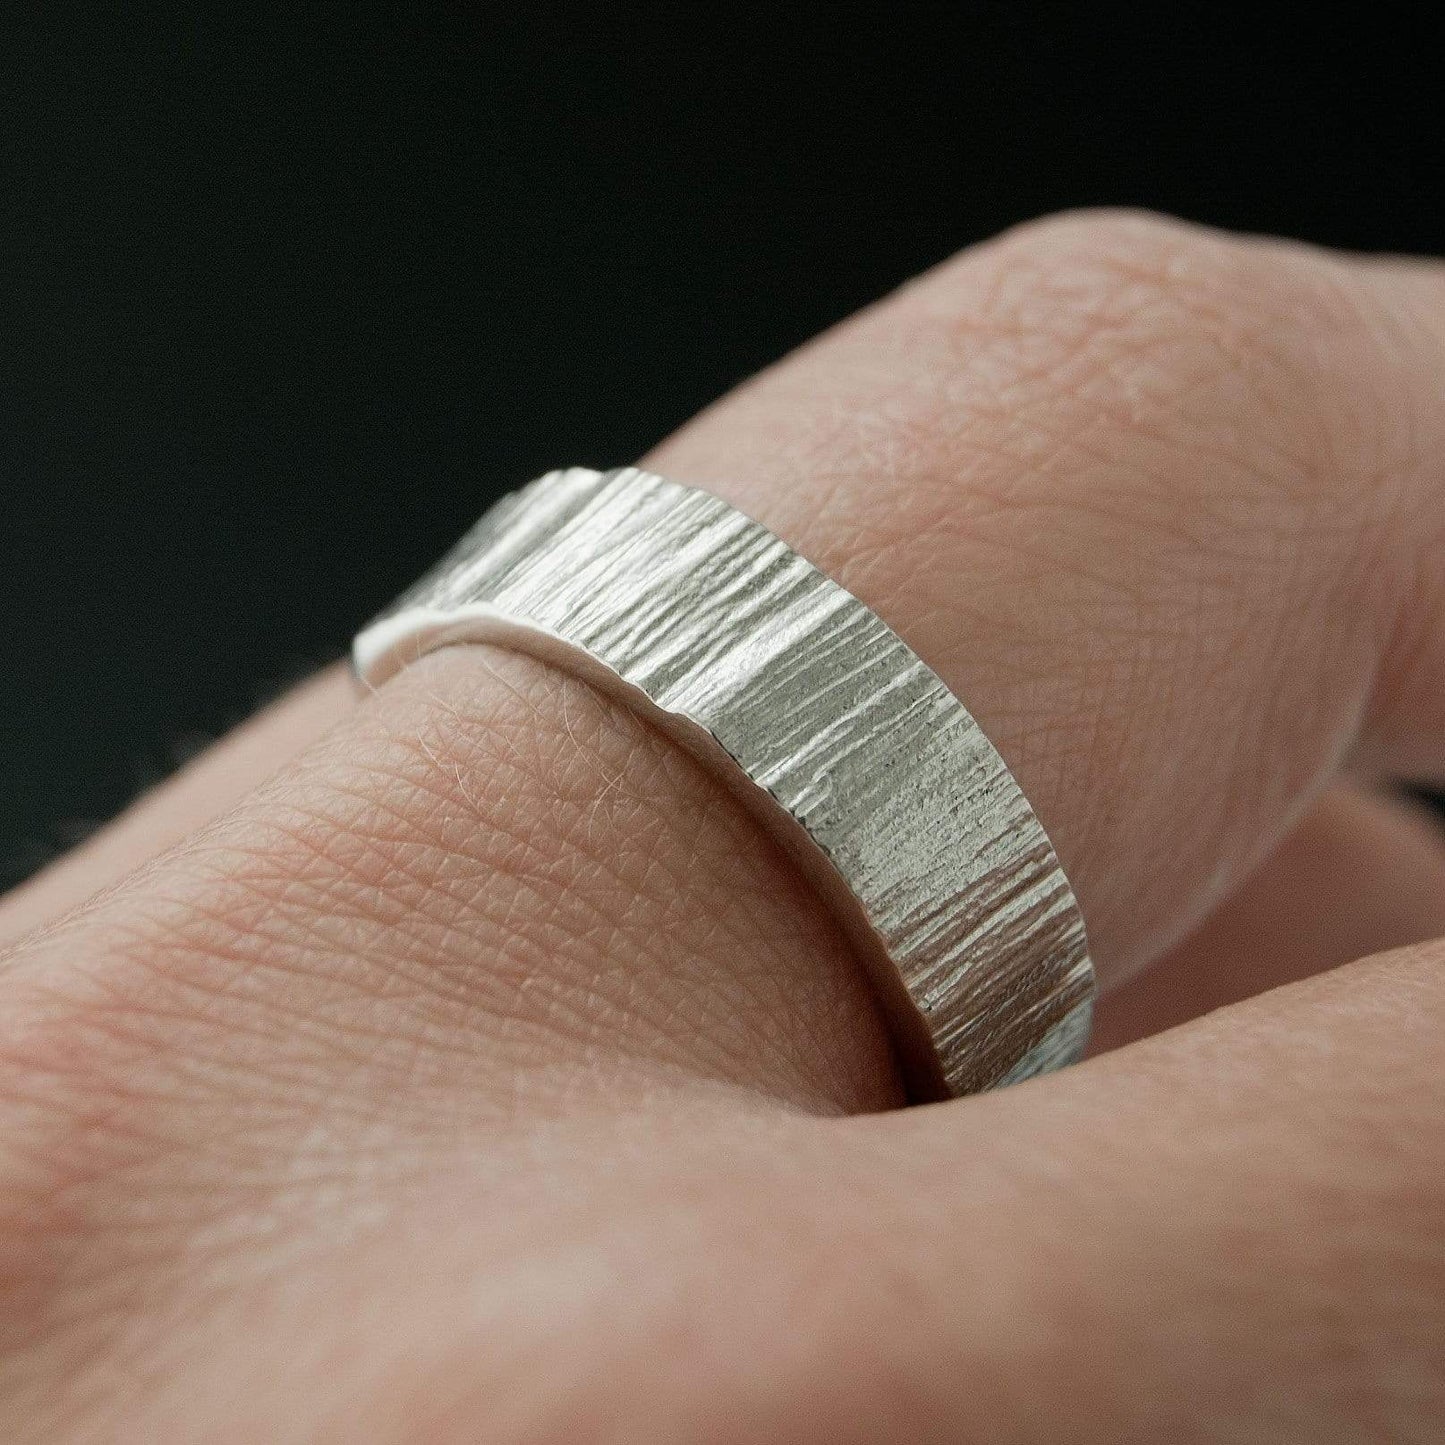 Wide Saw Cut Texture Wedding Band Ring by Nodeform